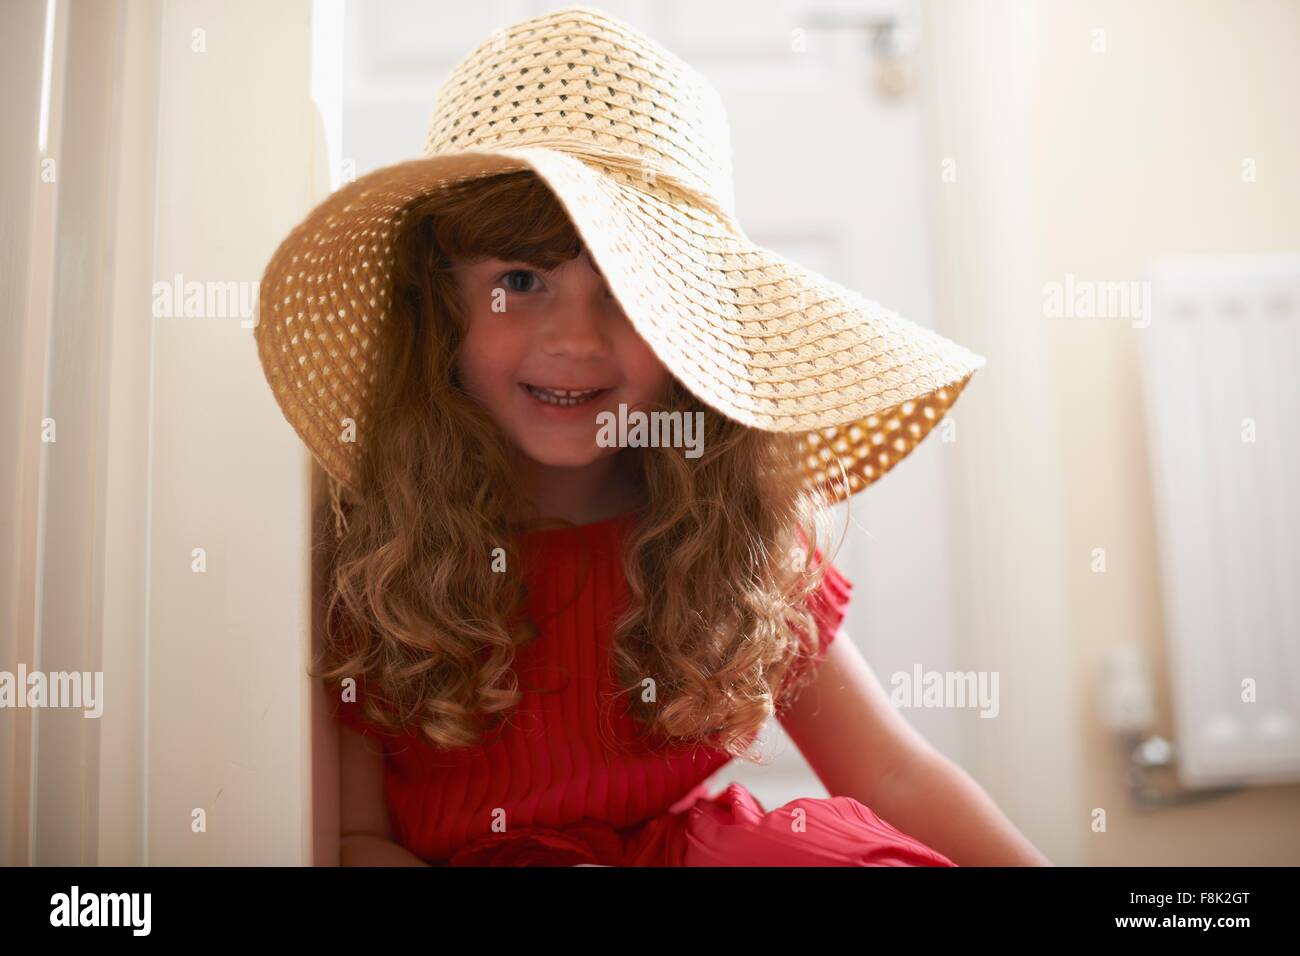 Portrait of cute girl wearing straw hat Stock Photo